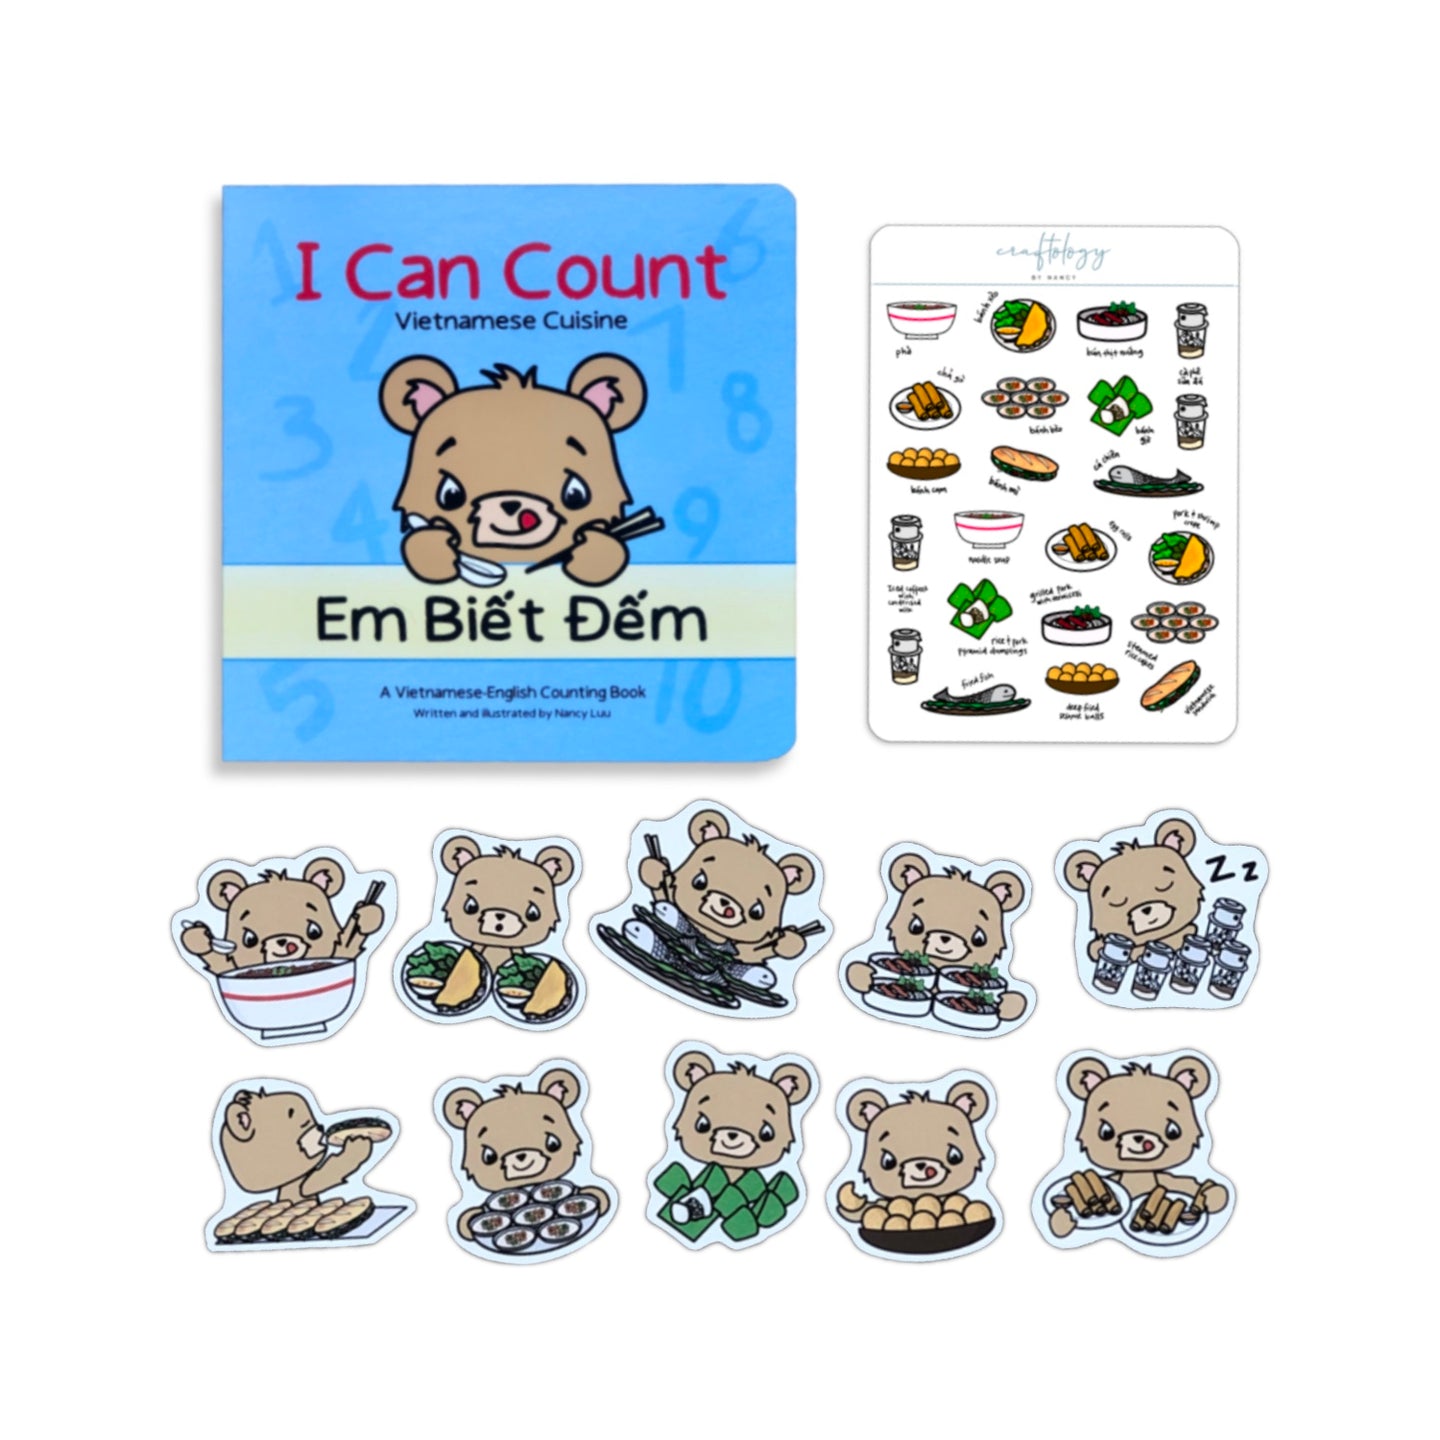 BUNDLE #2: I Can Count - Em Biết Đếm (Vietnamese Cuisine) | A Vietnamese-English Counting Book